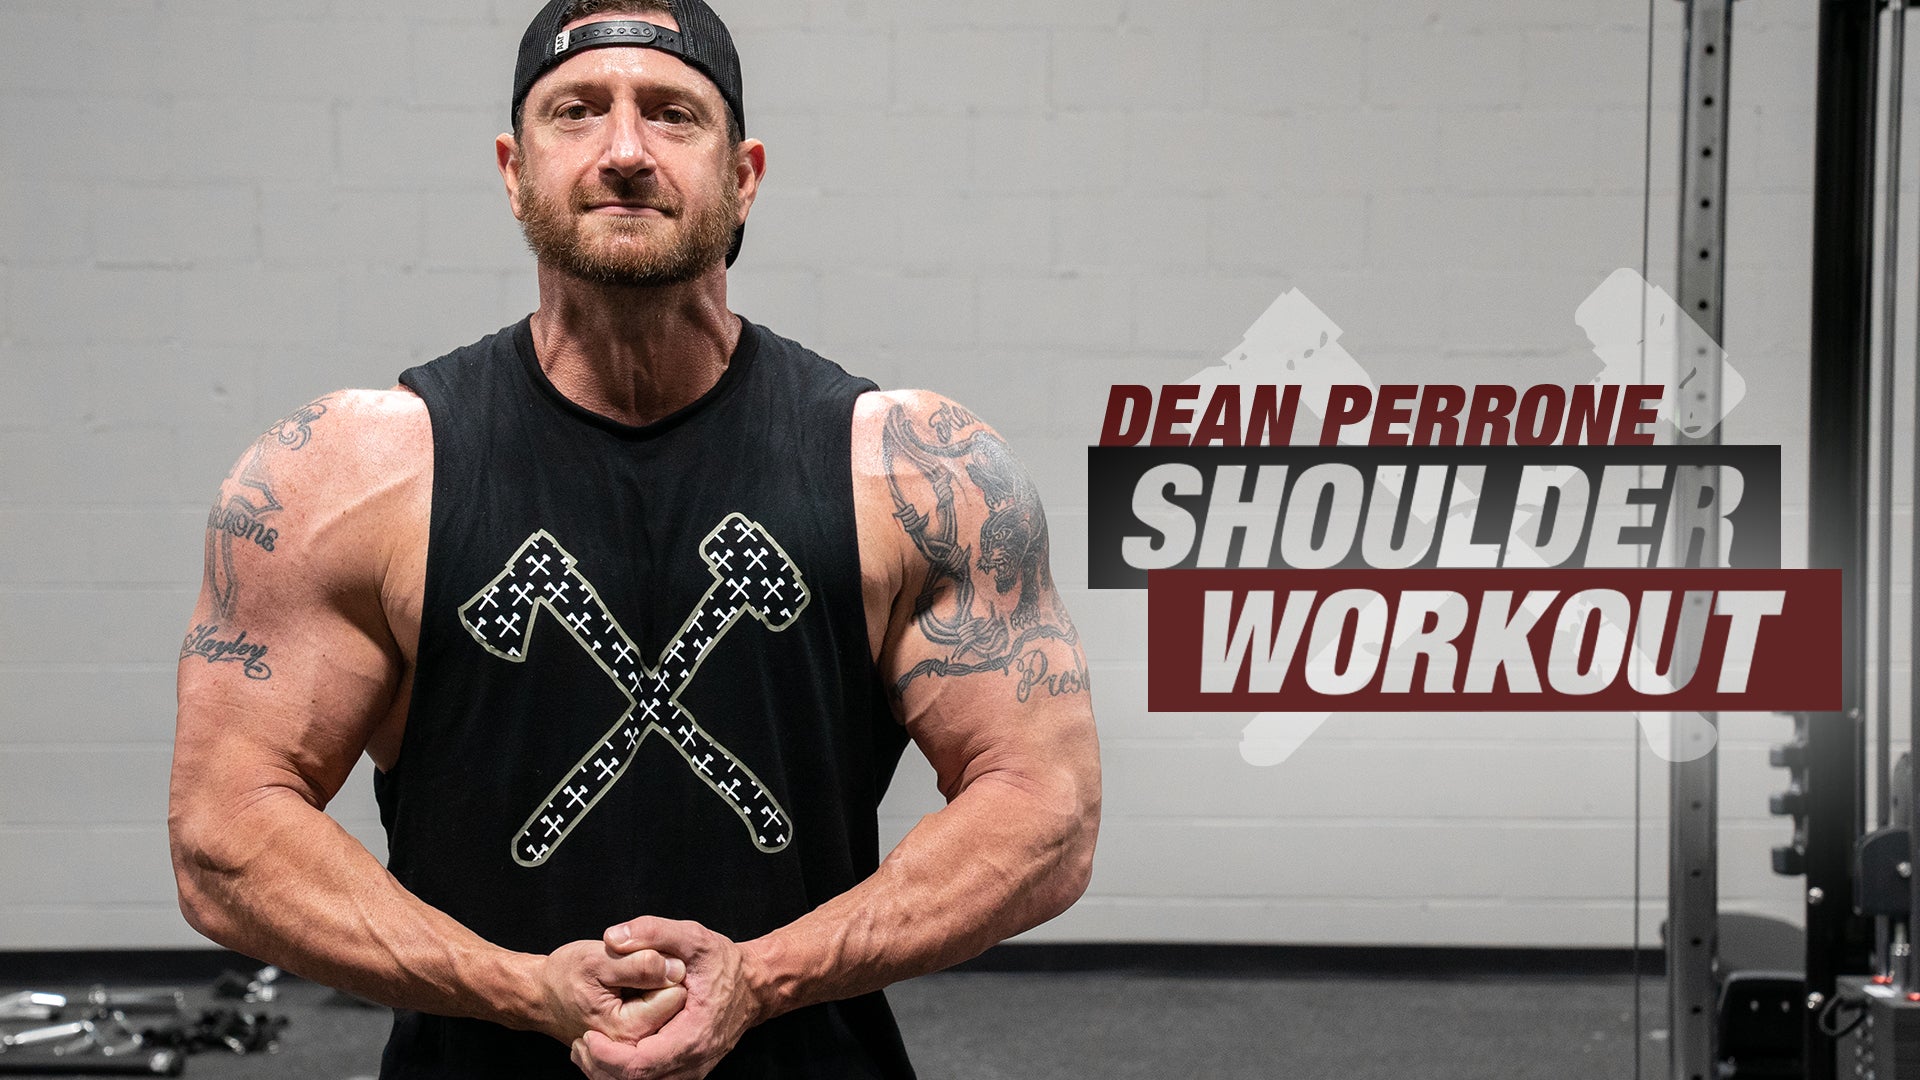 Dean Perrone - Shoulder Workout